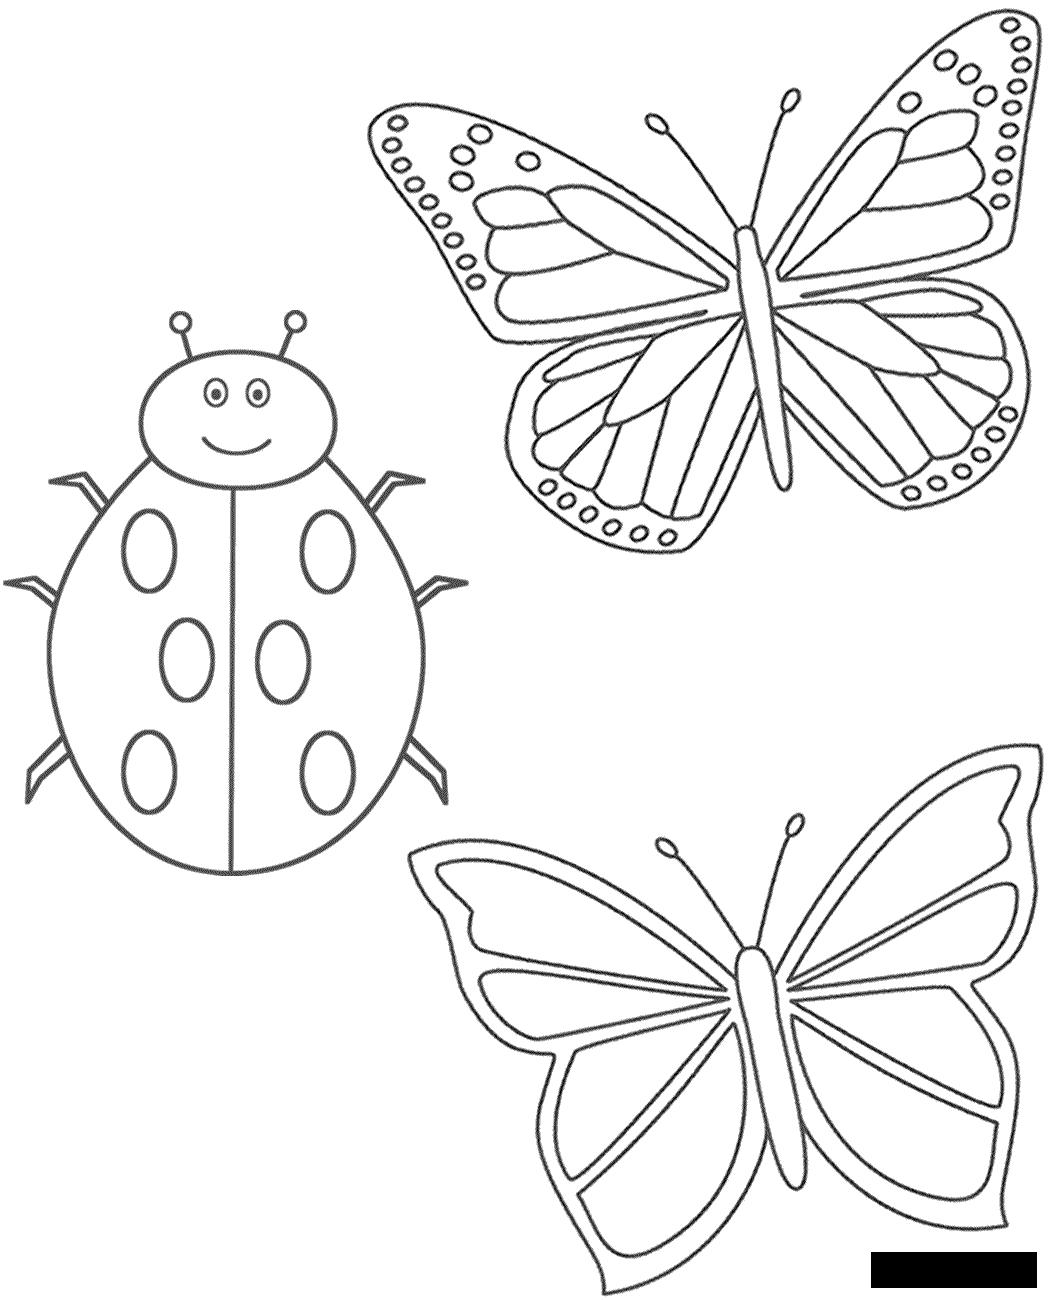 Розмальовки гусінь дитячі розмальовки, розмальовки для самих маленьких, комахи, метелик, гусінь